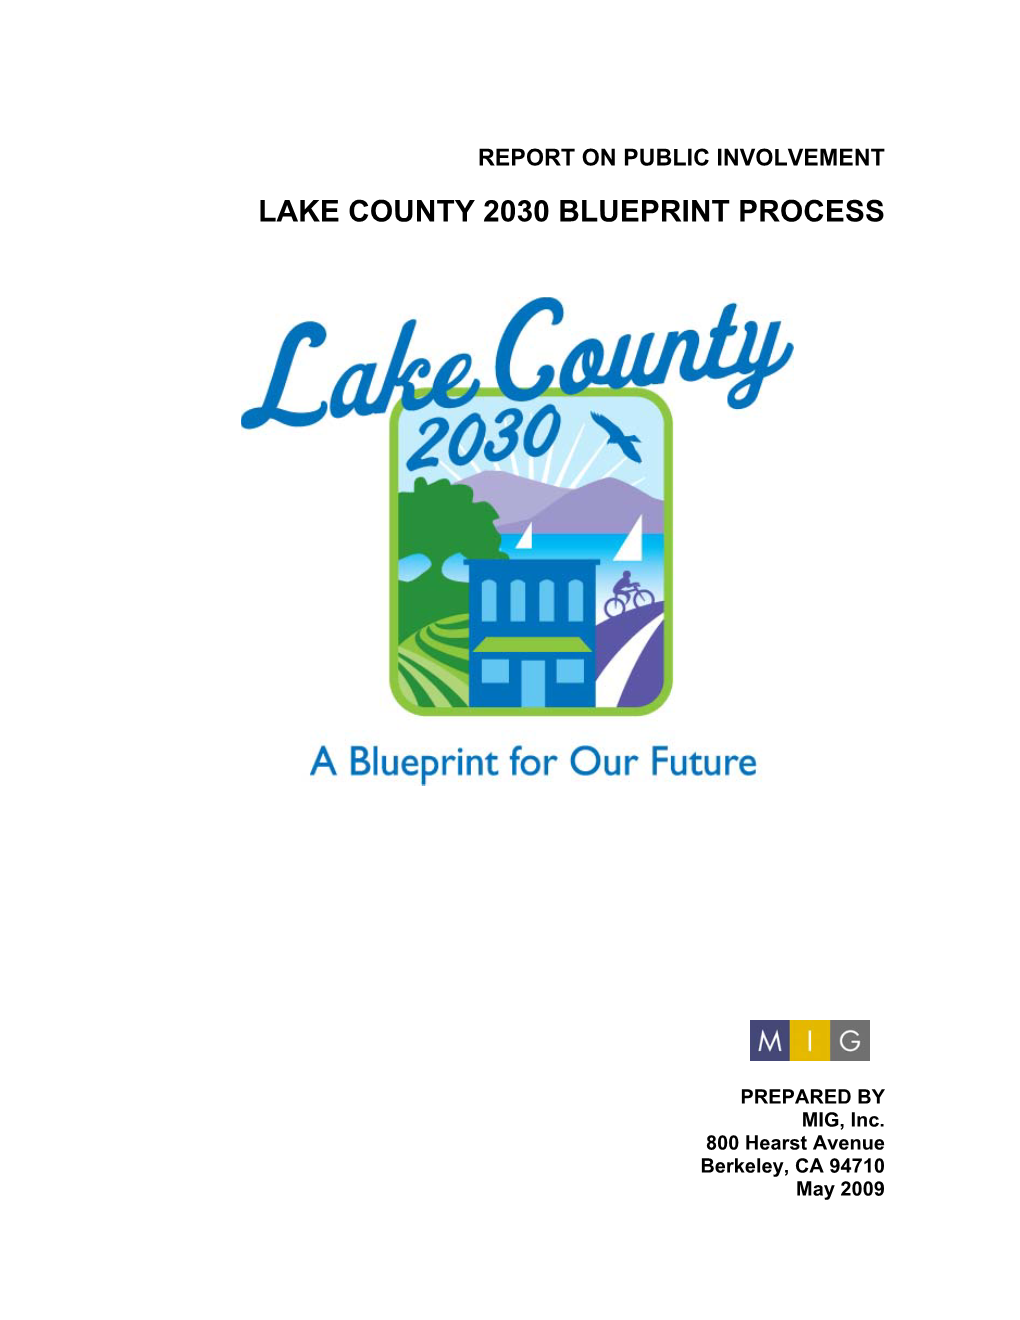 Lake County 2030 Blueprint Process